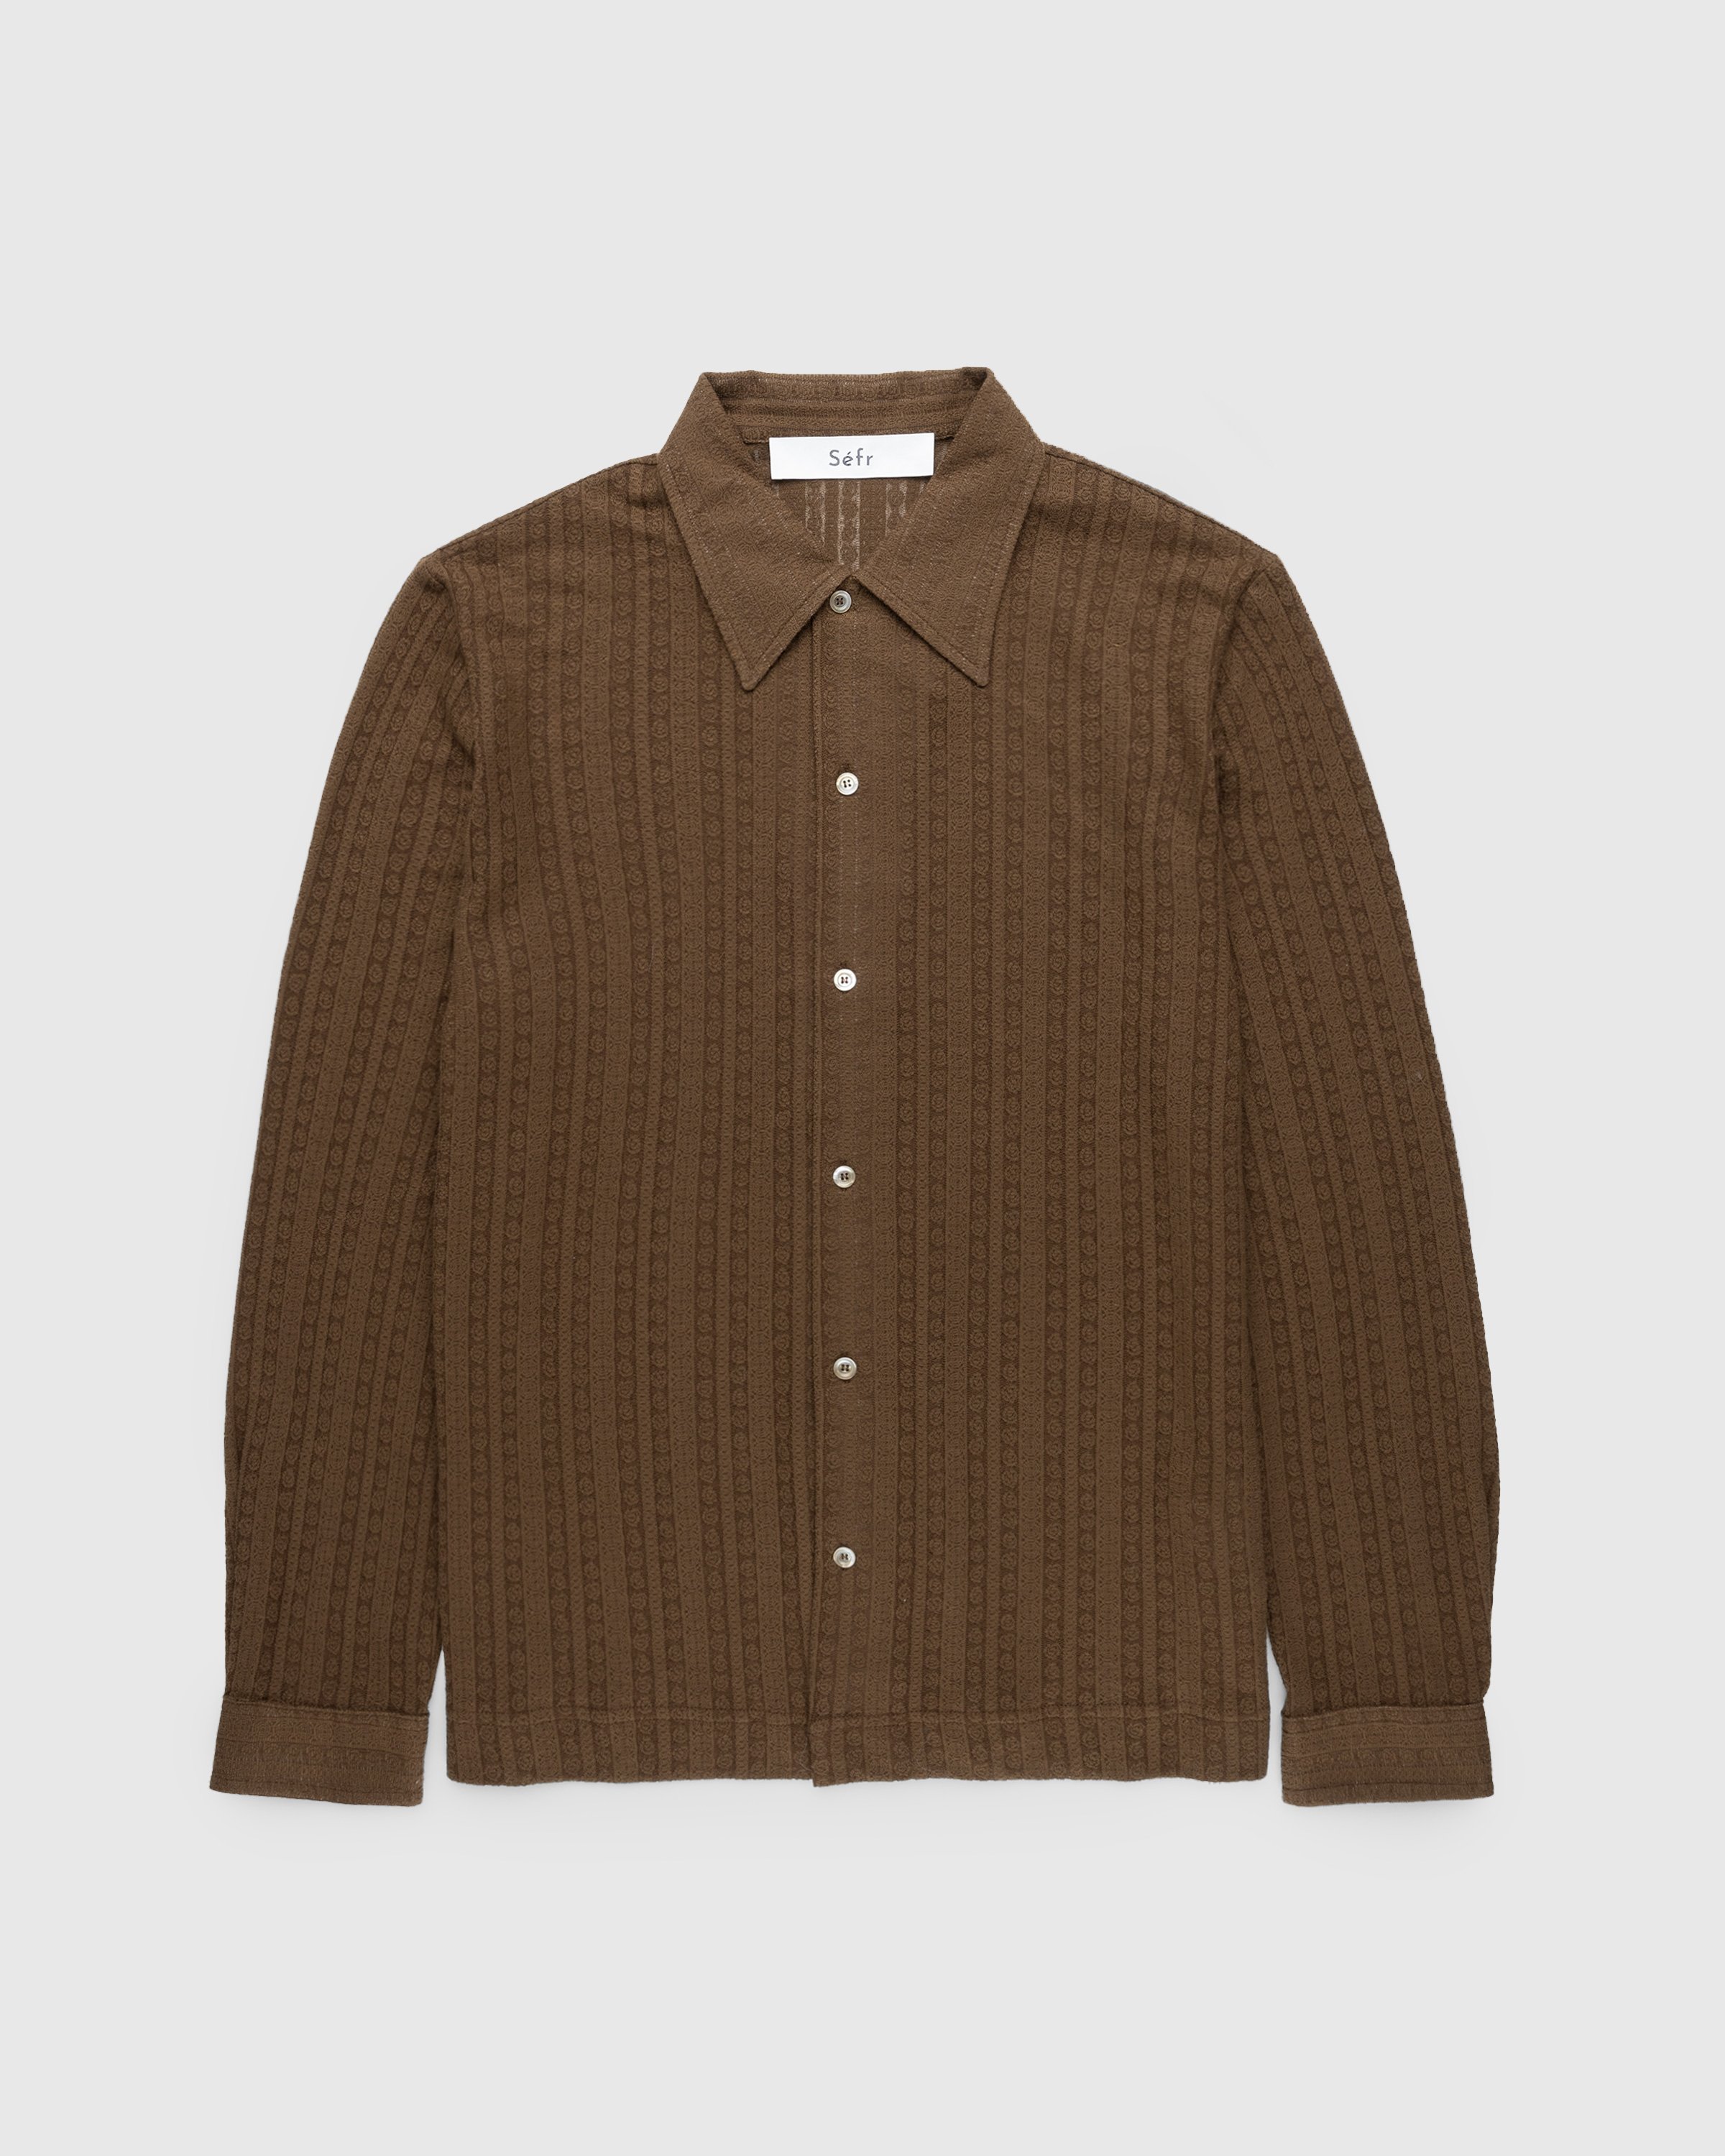 Séfr - Ripley Shirt Espresso Medallion - Clothing - Brown - Image 1